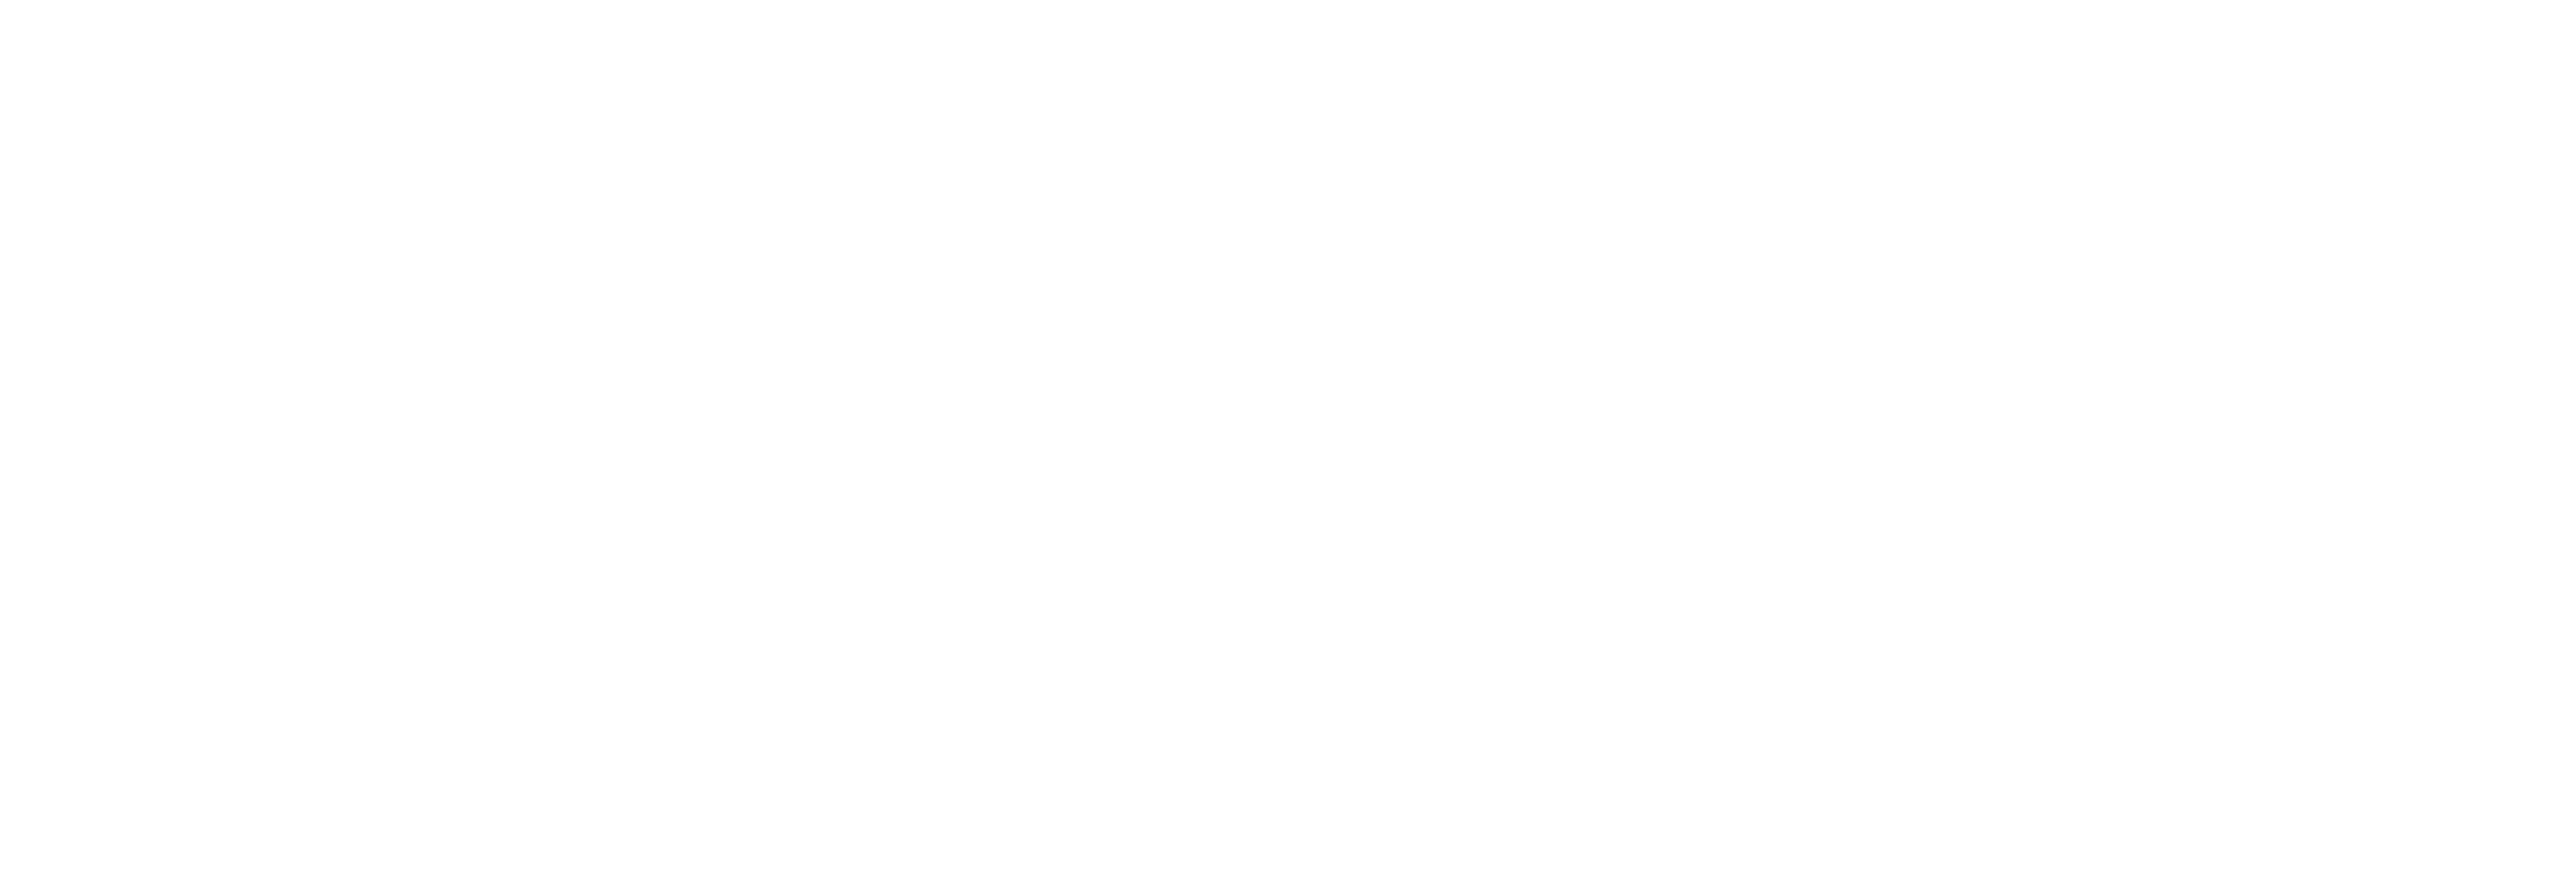 Logo for Kiam & Abraham, LLC Attorneys at Law